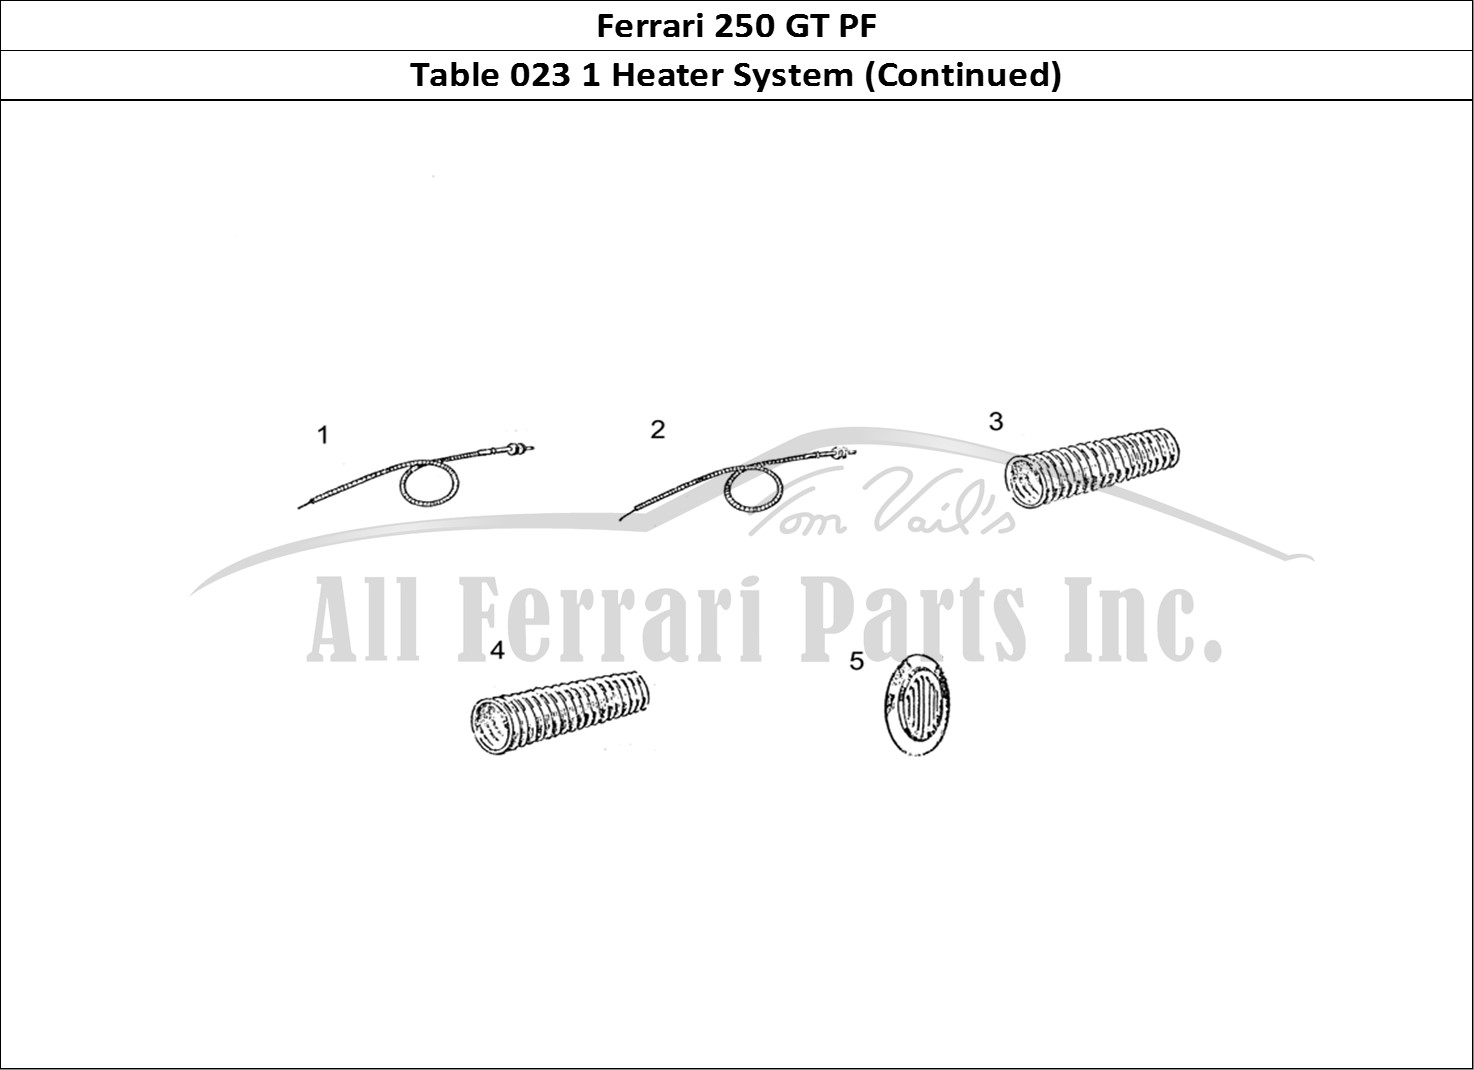 Ferrari Parts Ferrari 250 GT (Coachwork) Page 023 Heater System (continued)